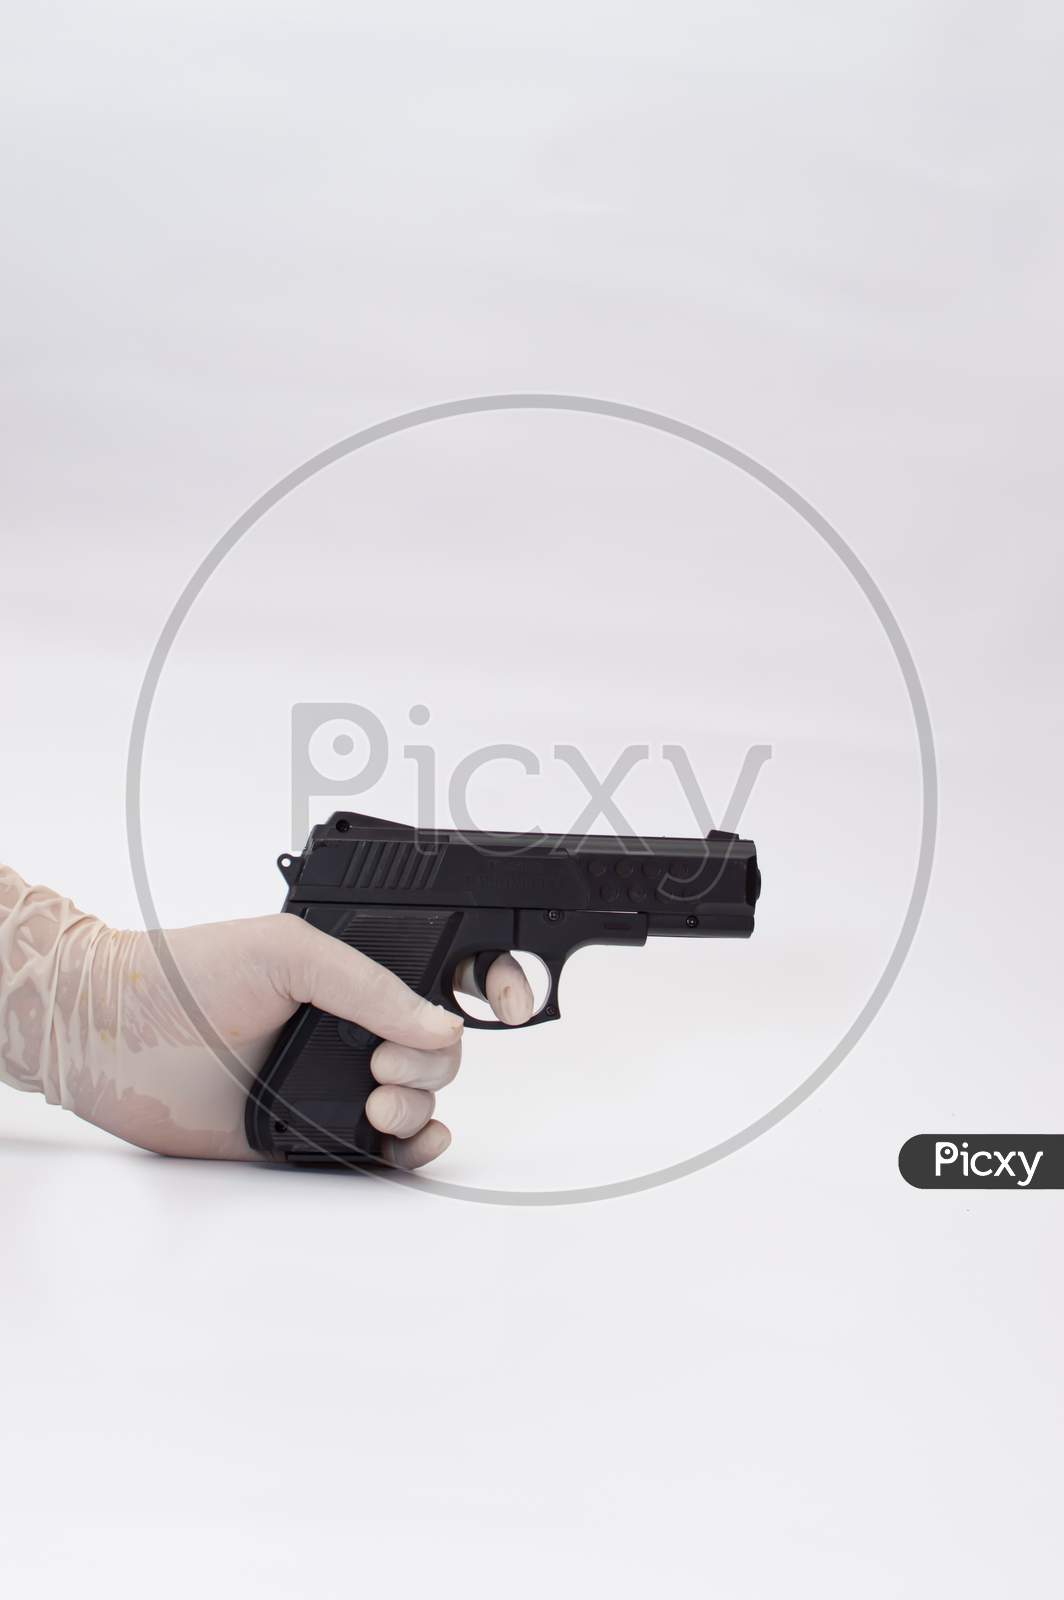 black gun in a hand wearing glove